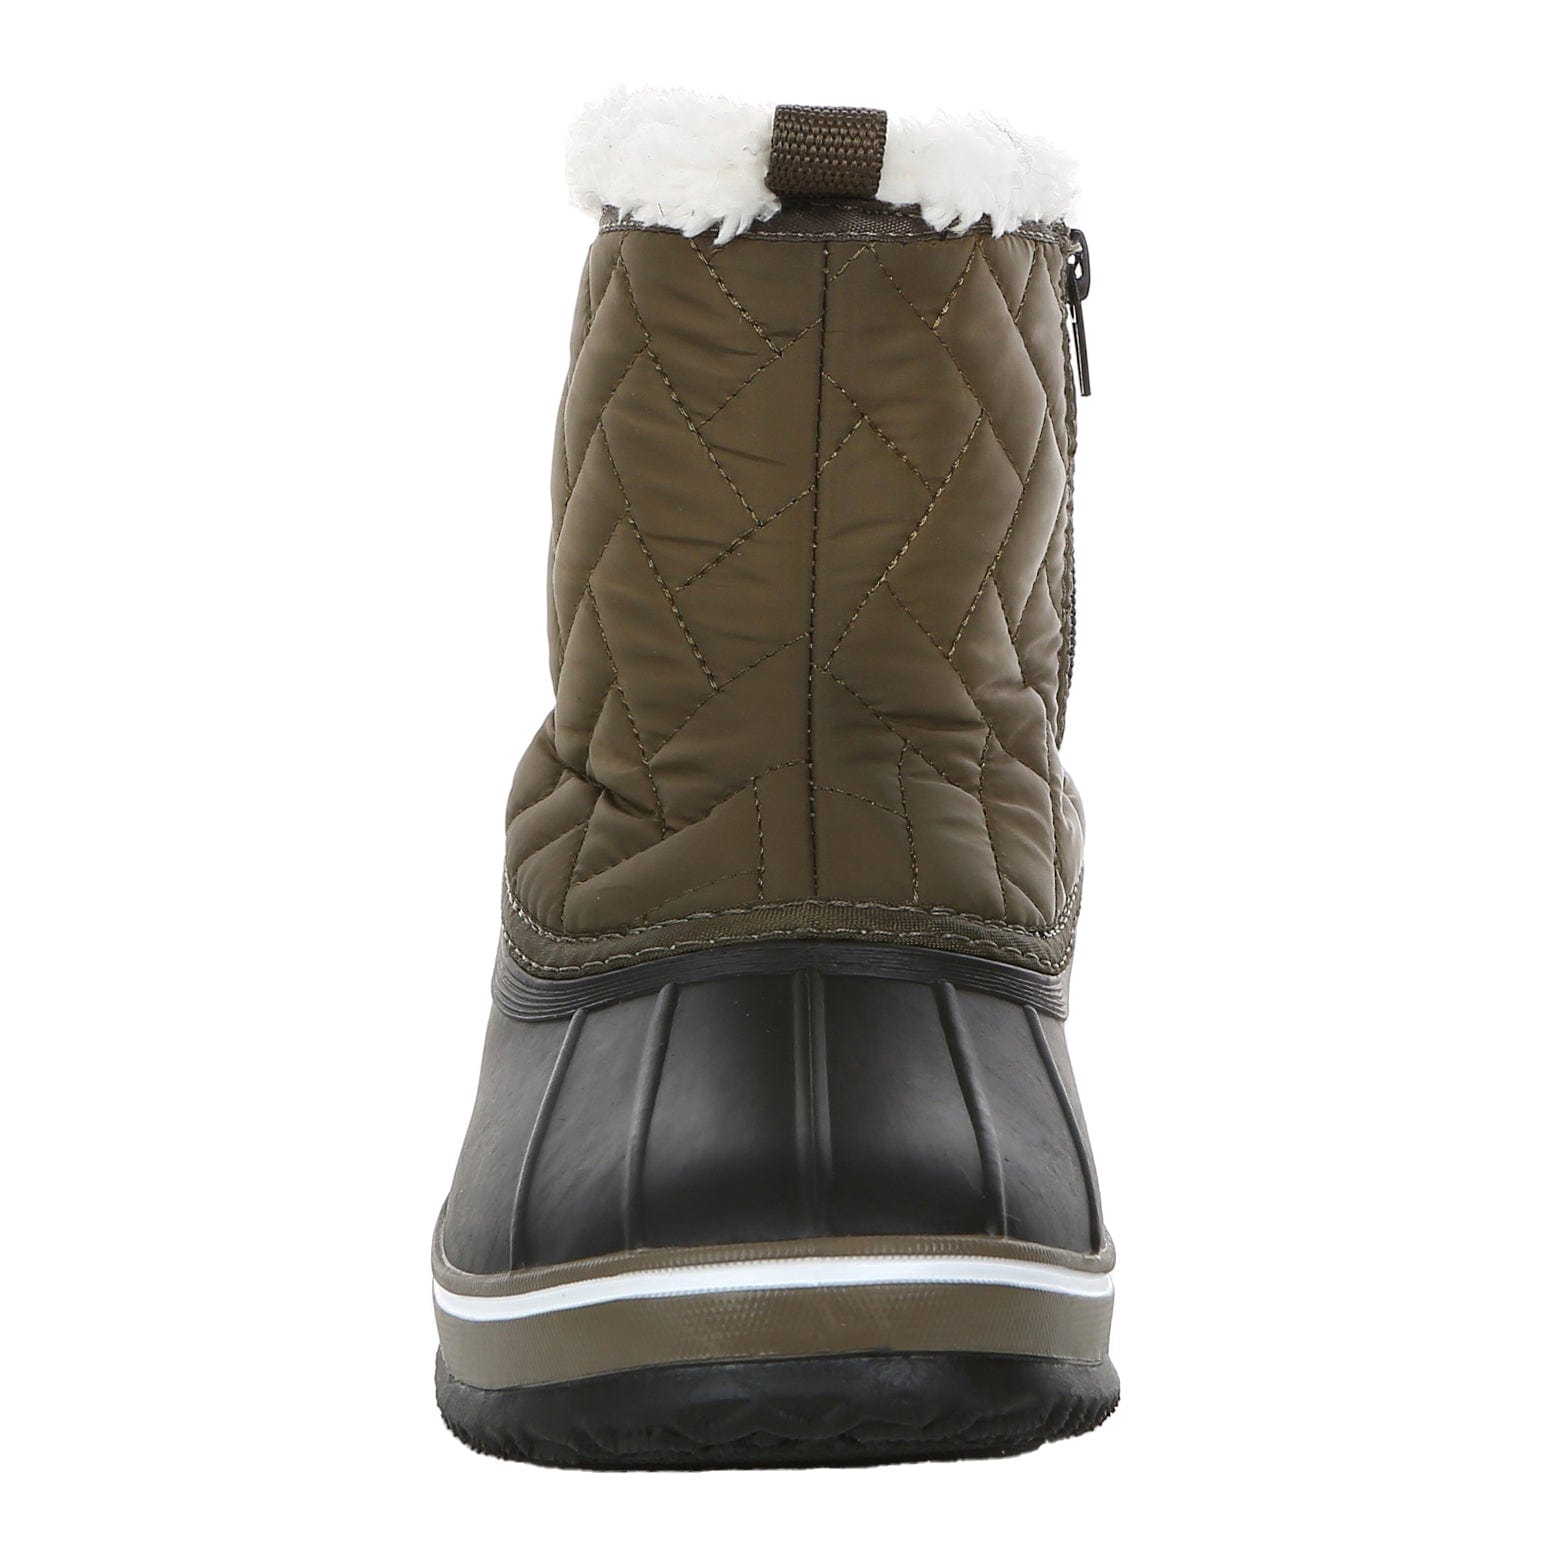 Women's Morgan Crest Waterproof Insulated Winter Snow Boot - Northside USA